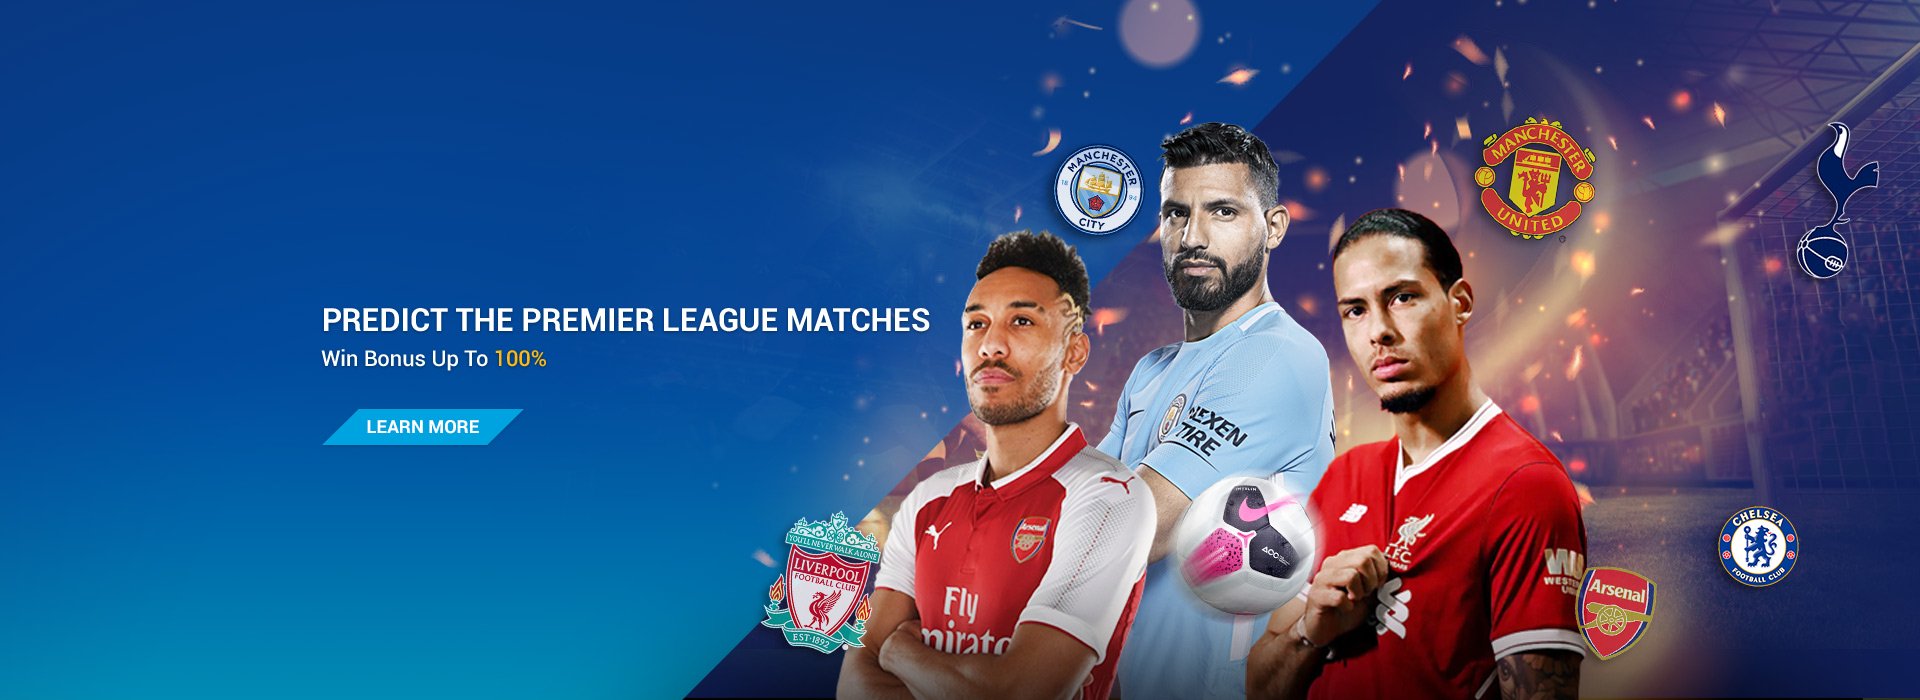 iBET Online Casino Sports Promotion-Predict The Premier League Matches and Win Bonus